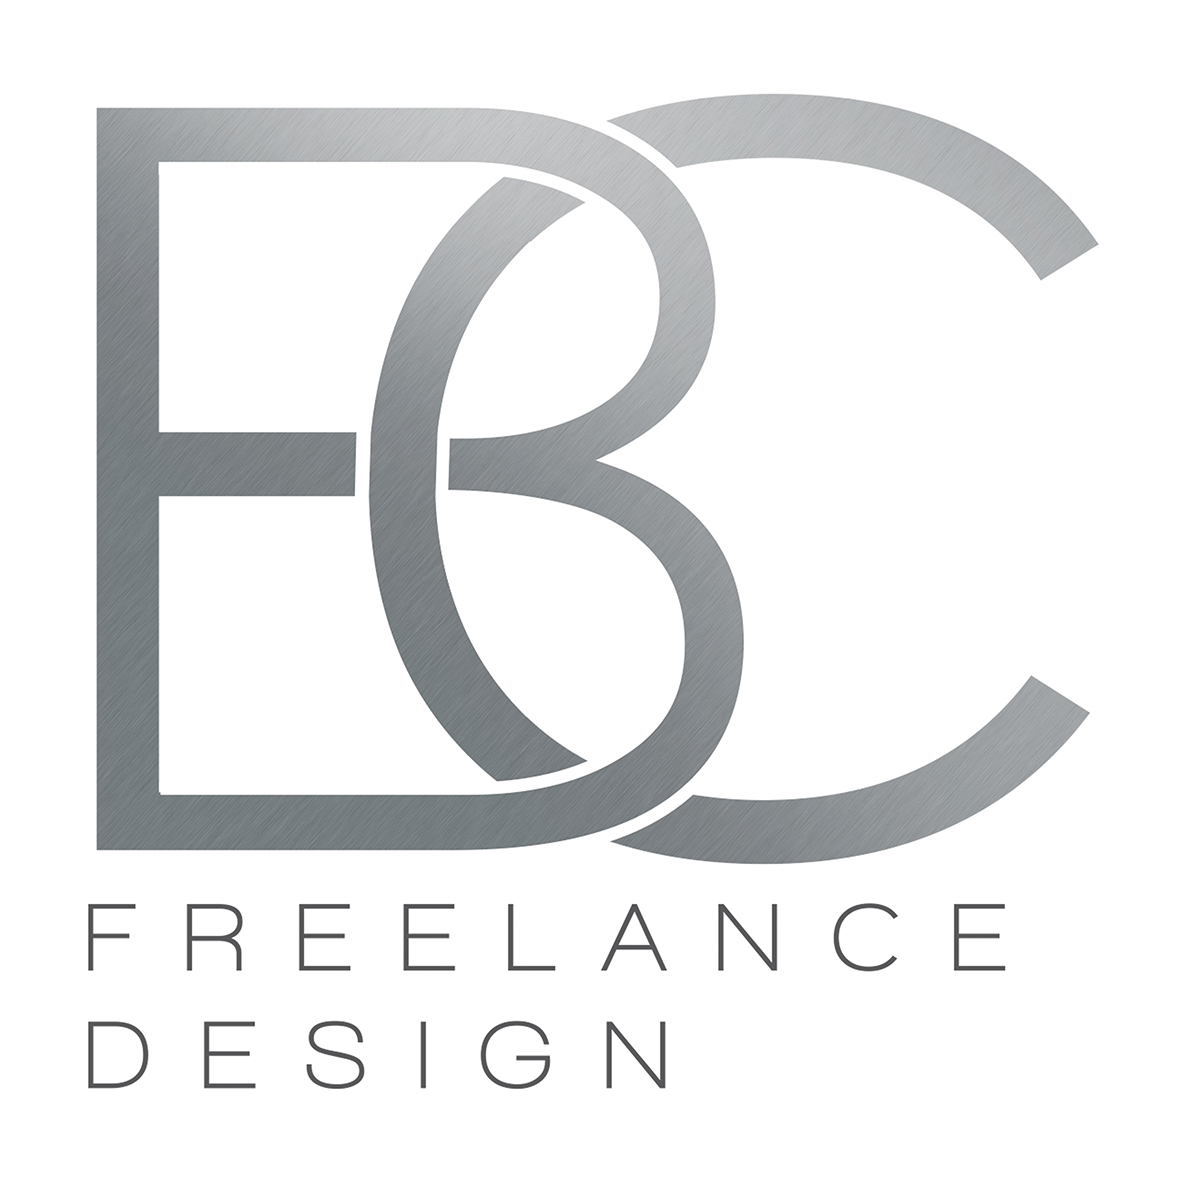 BC freelance design - Kempsey Accommodation